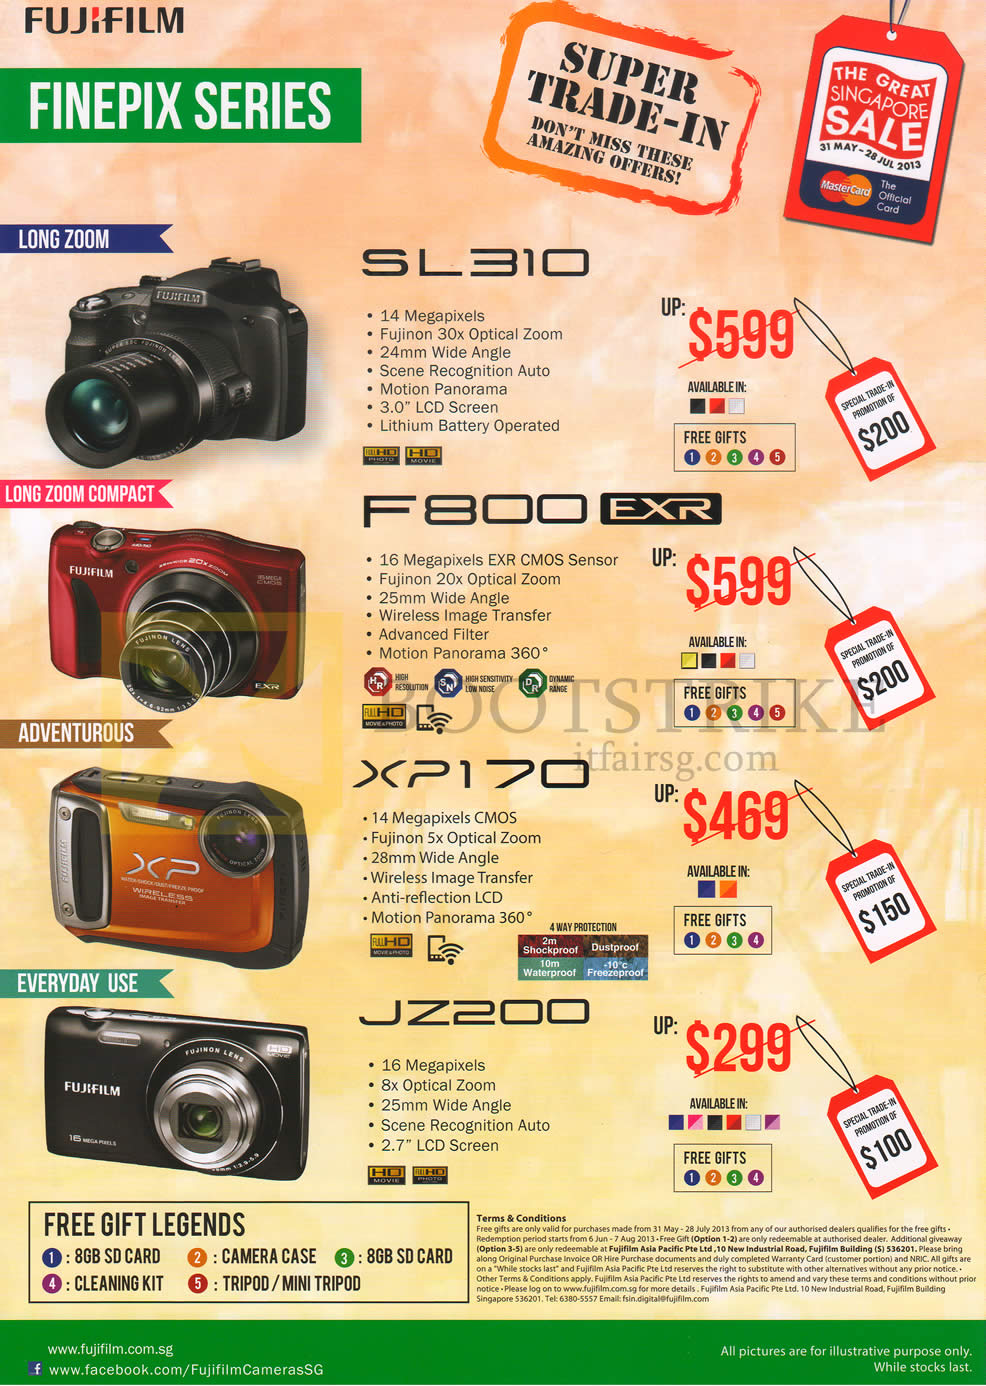 PC SHOW 2013 price list image brochure of Fujifilm Digital Cameras SL310, F800EXR, XP170, JZ200